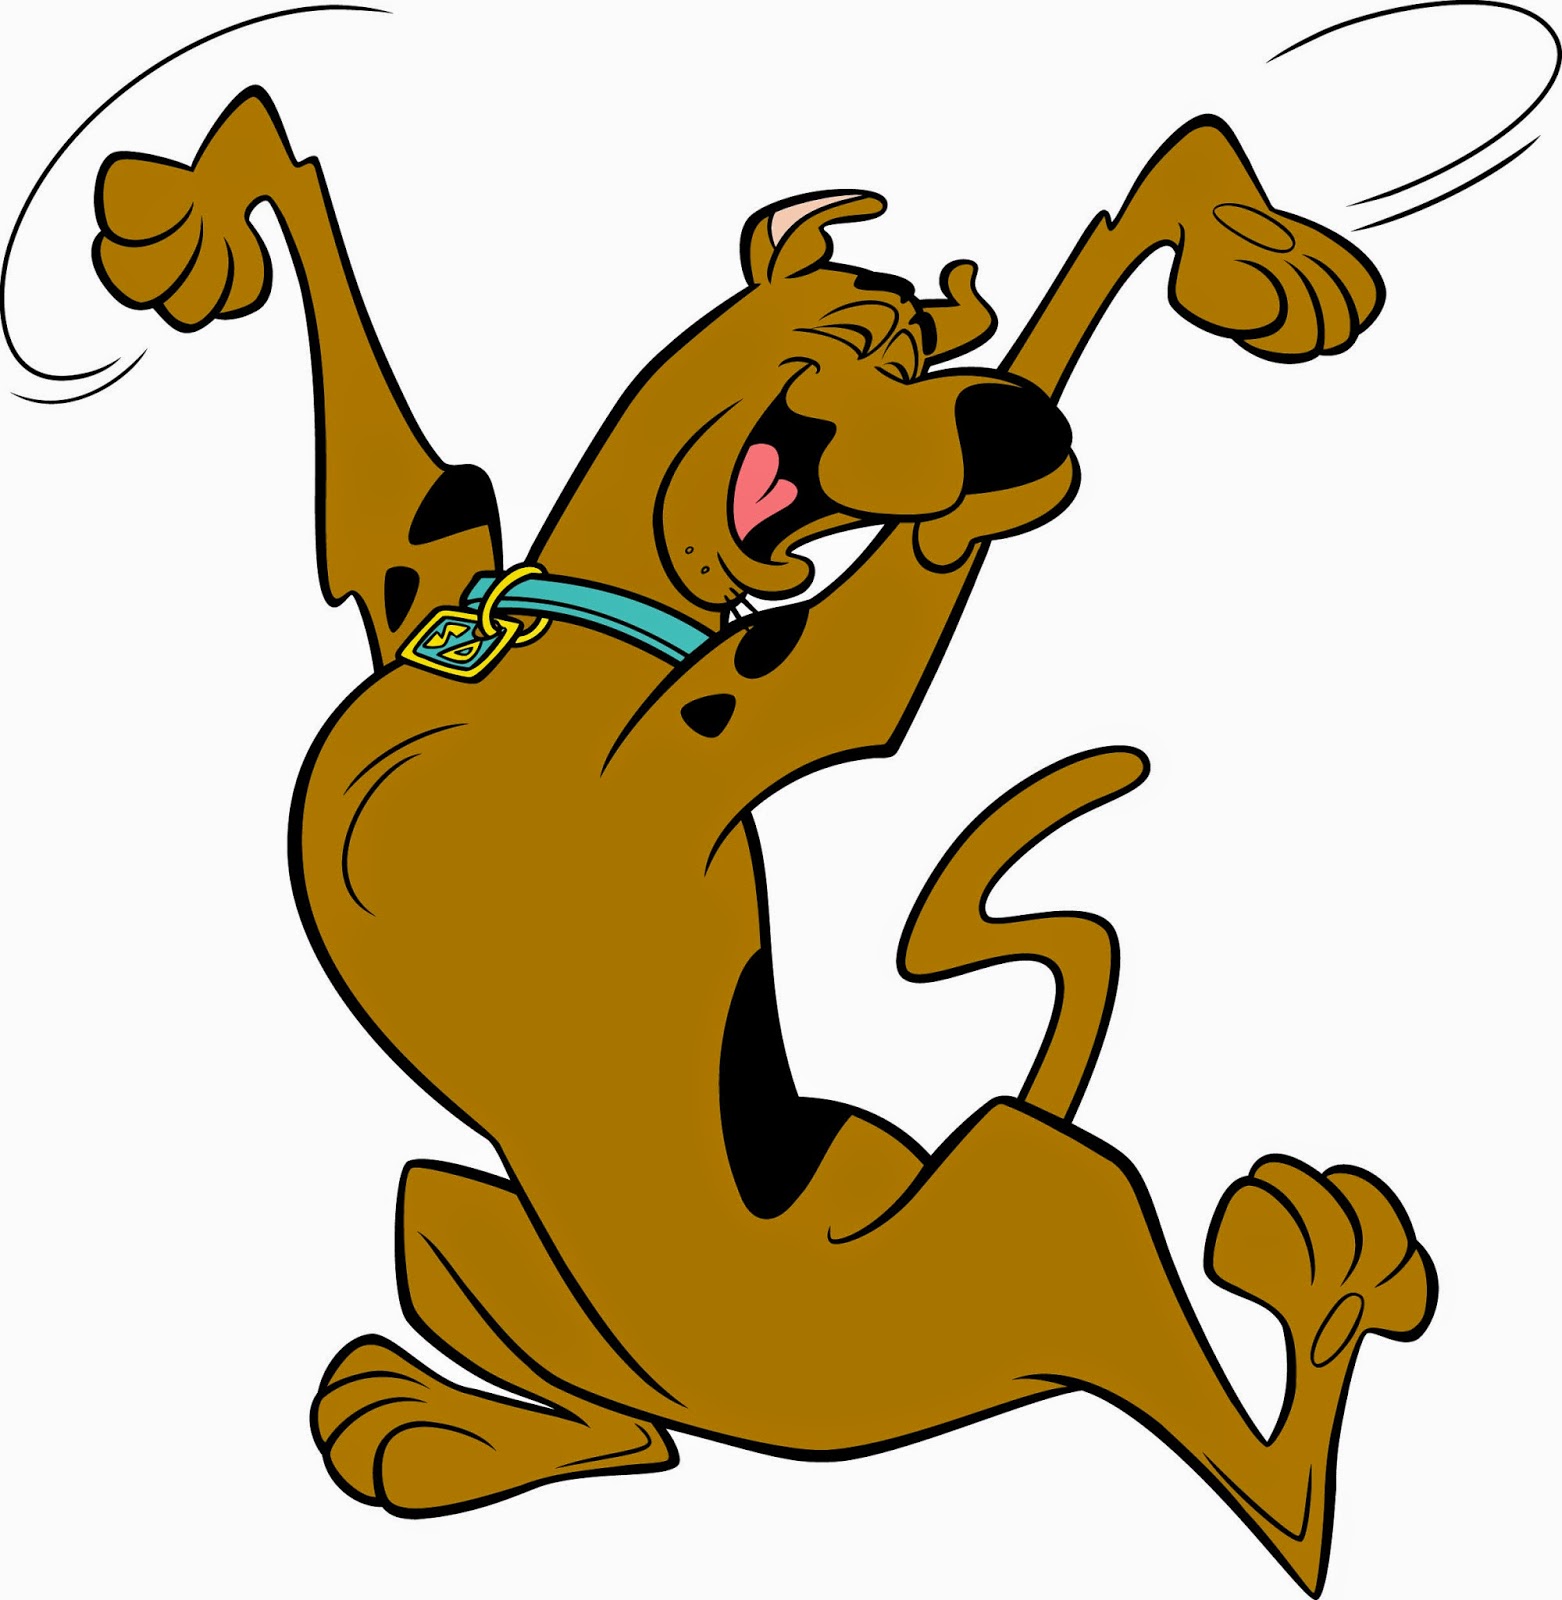 Kumpulan Gambar Scooby Doo Gambar Lucu Terbaru Cartoon Animation